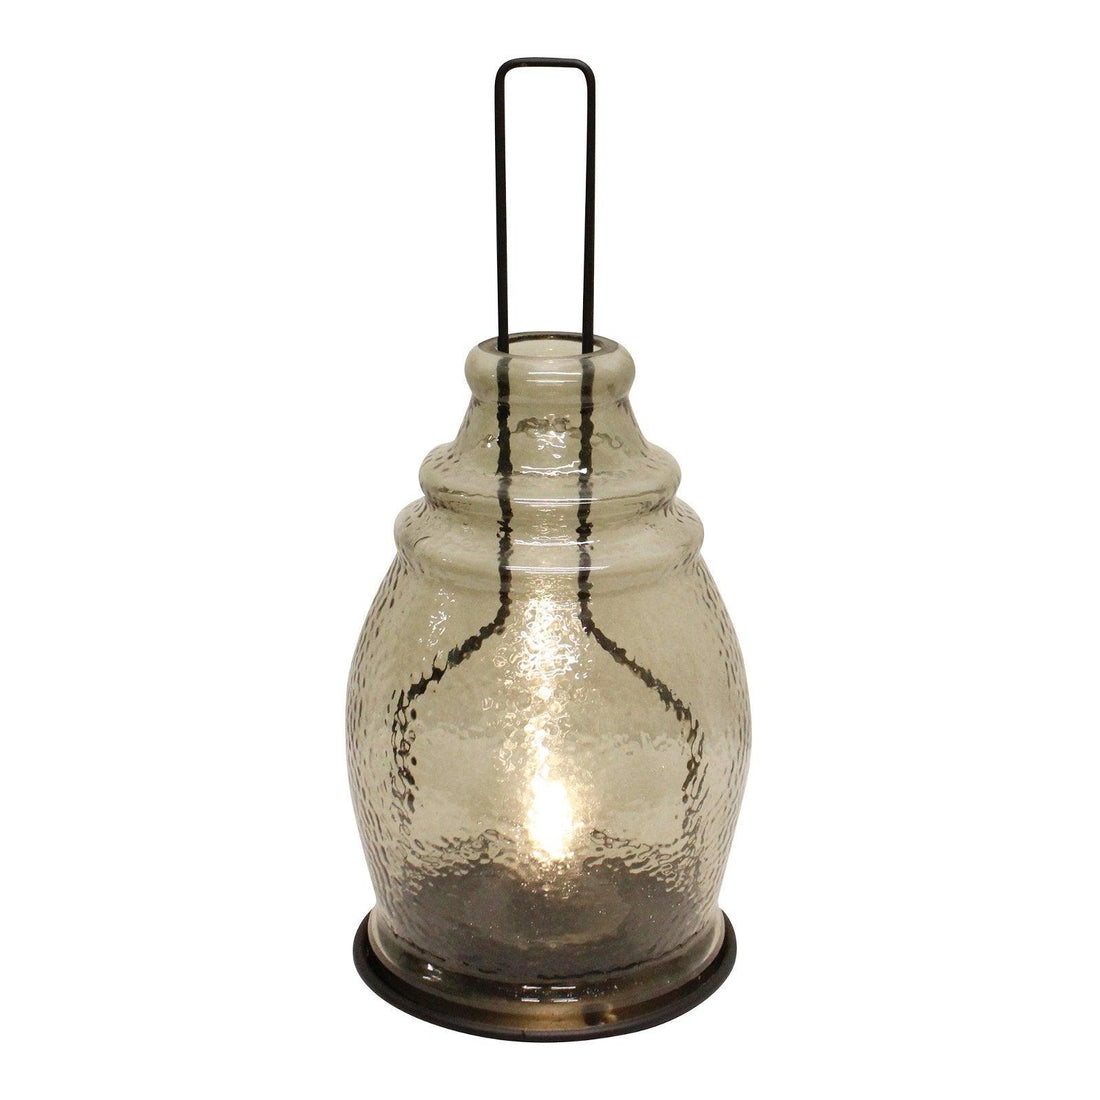 LED Glass Lantern, Grey & Black, 35x15cm. - £26.99 - LED Lighting 